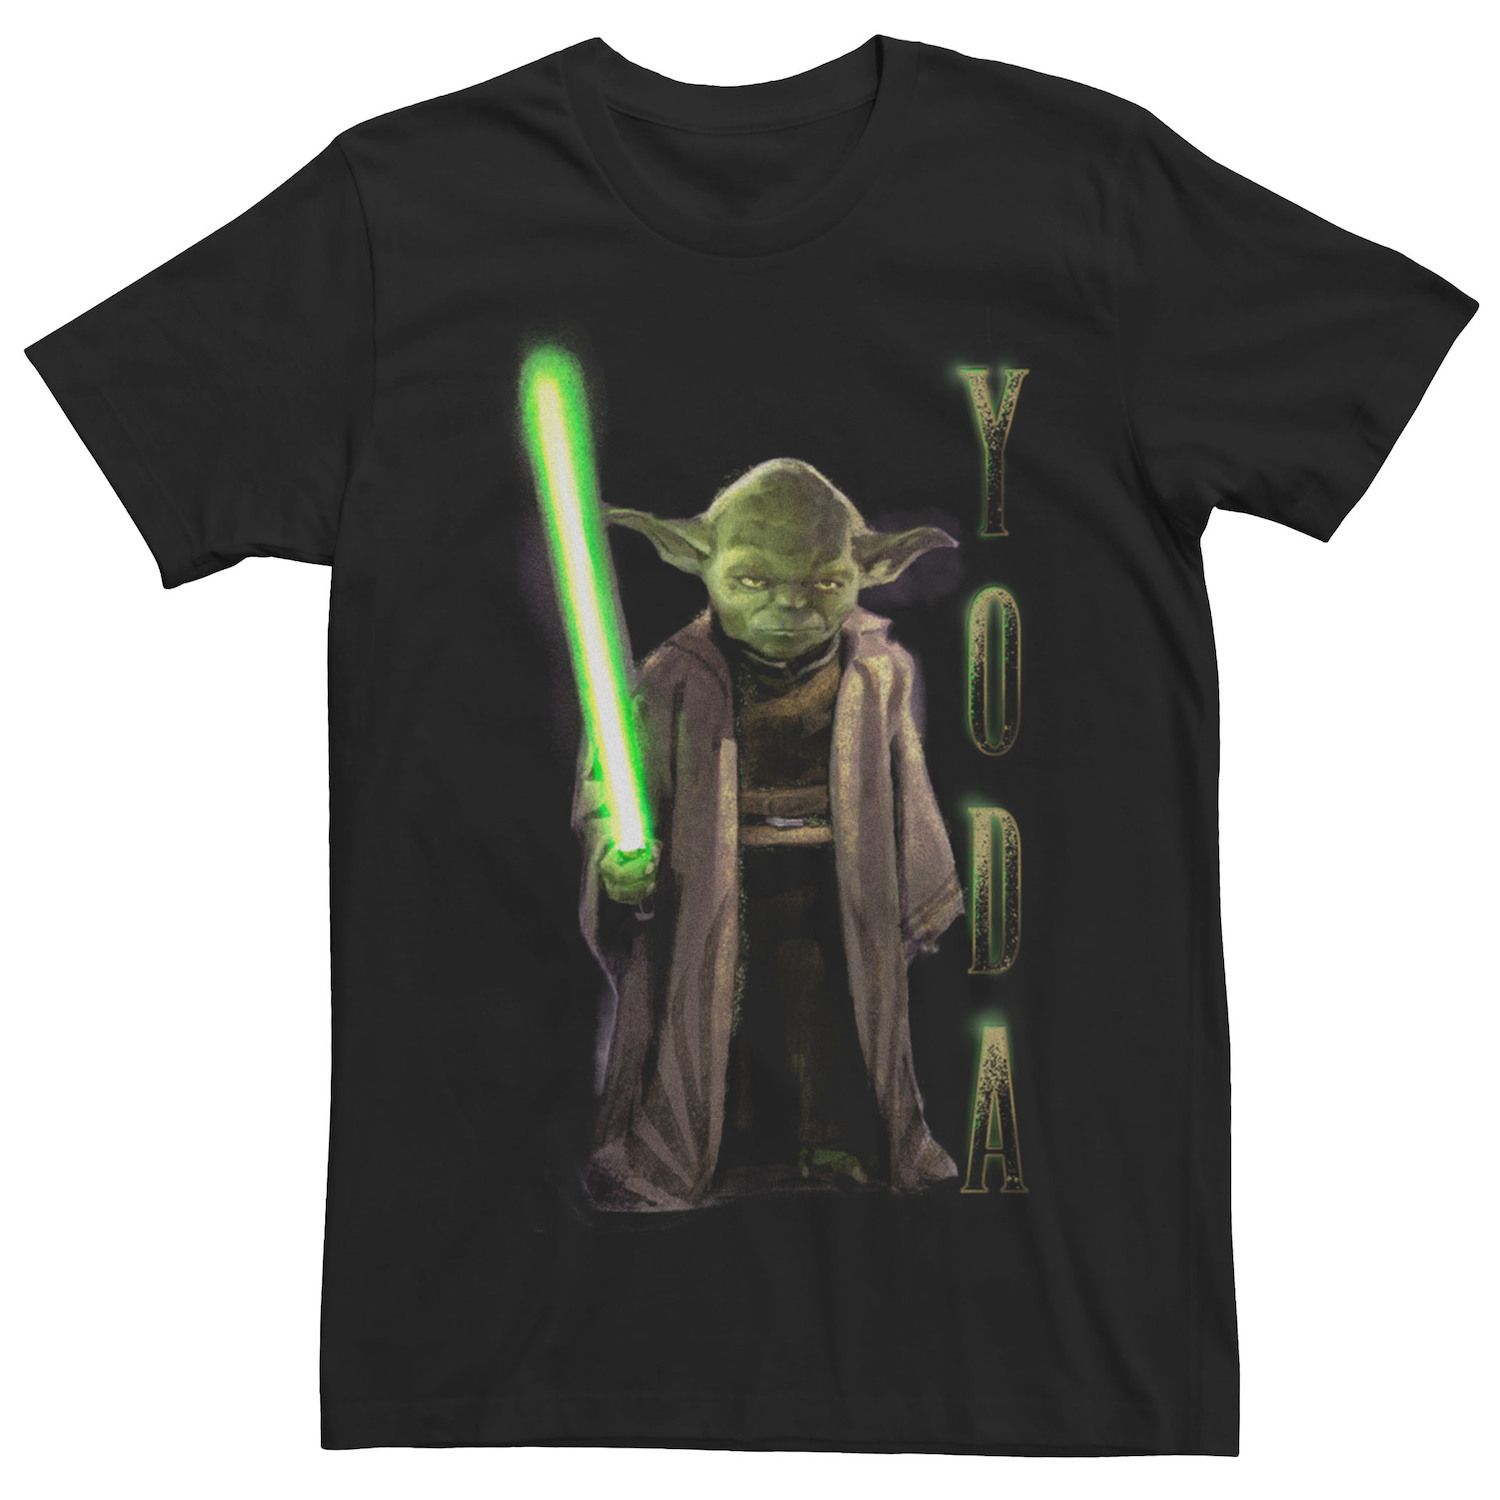 Мужская футболка с плакатом «Звездные войны Йода» Licensed Character